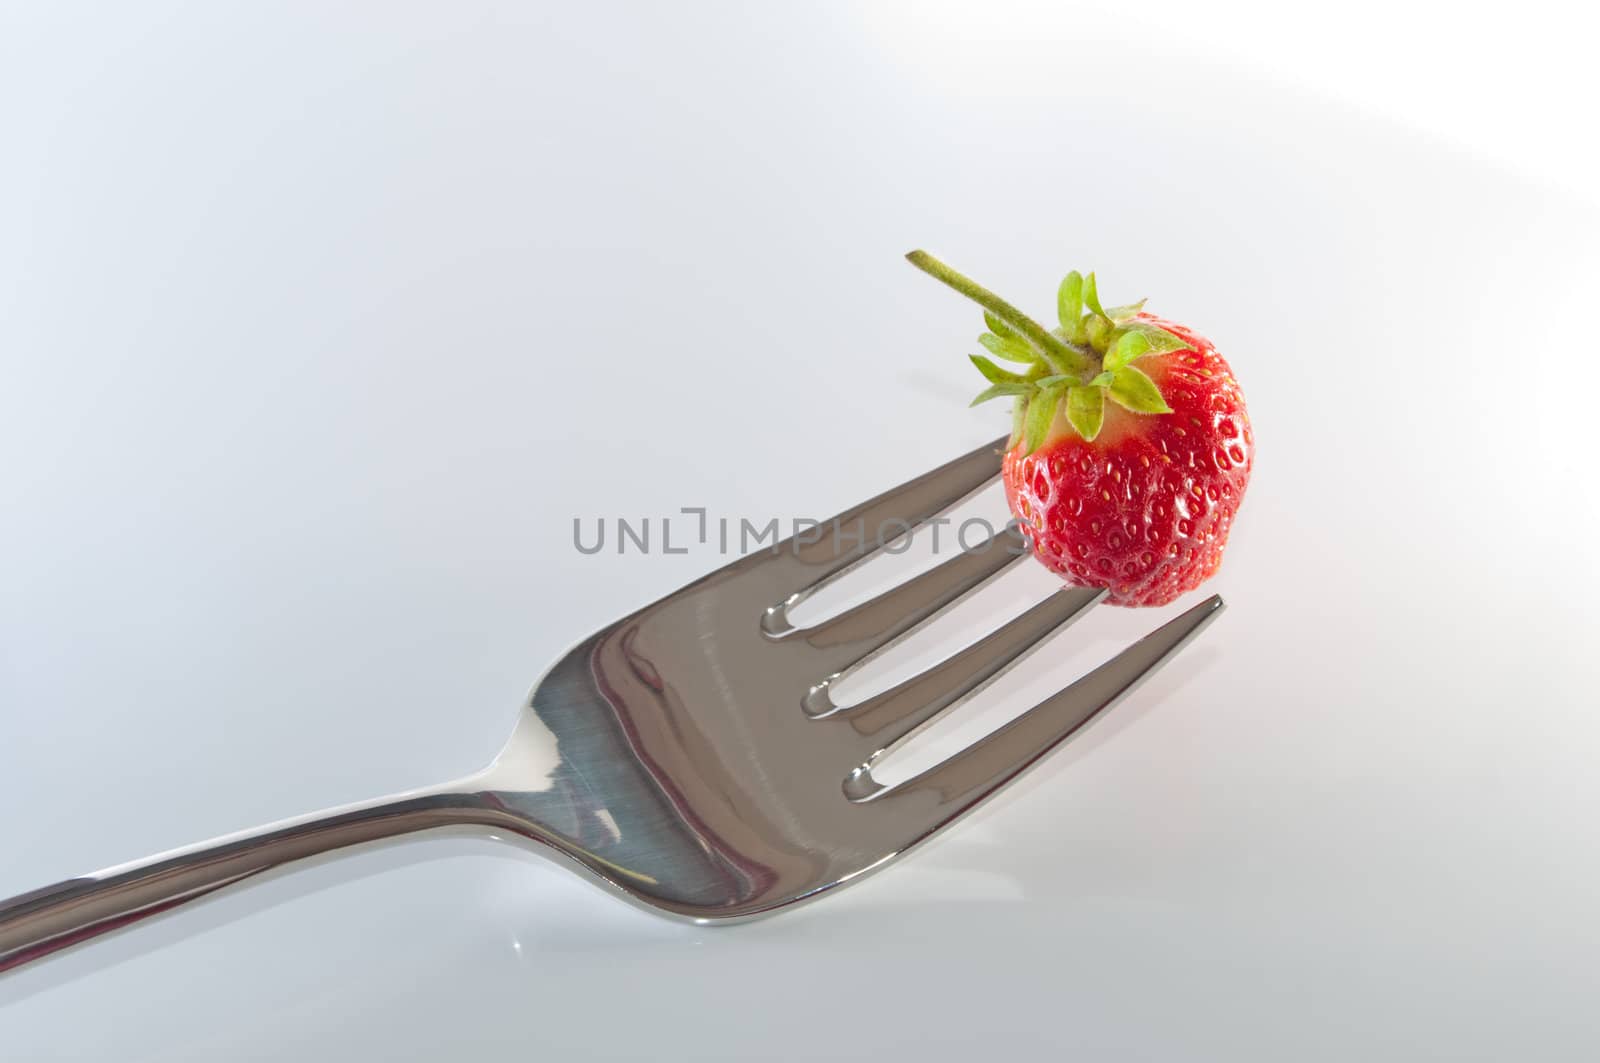 Strawberry on fork by franz_hein